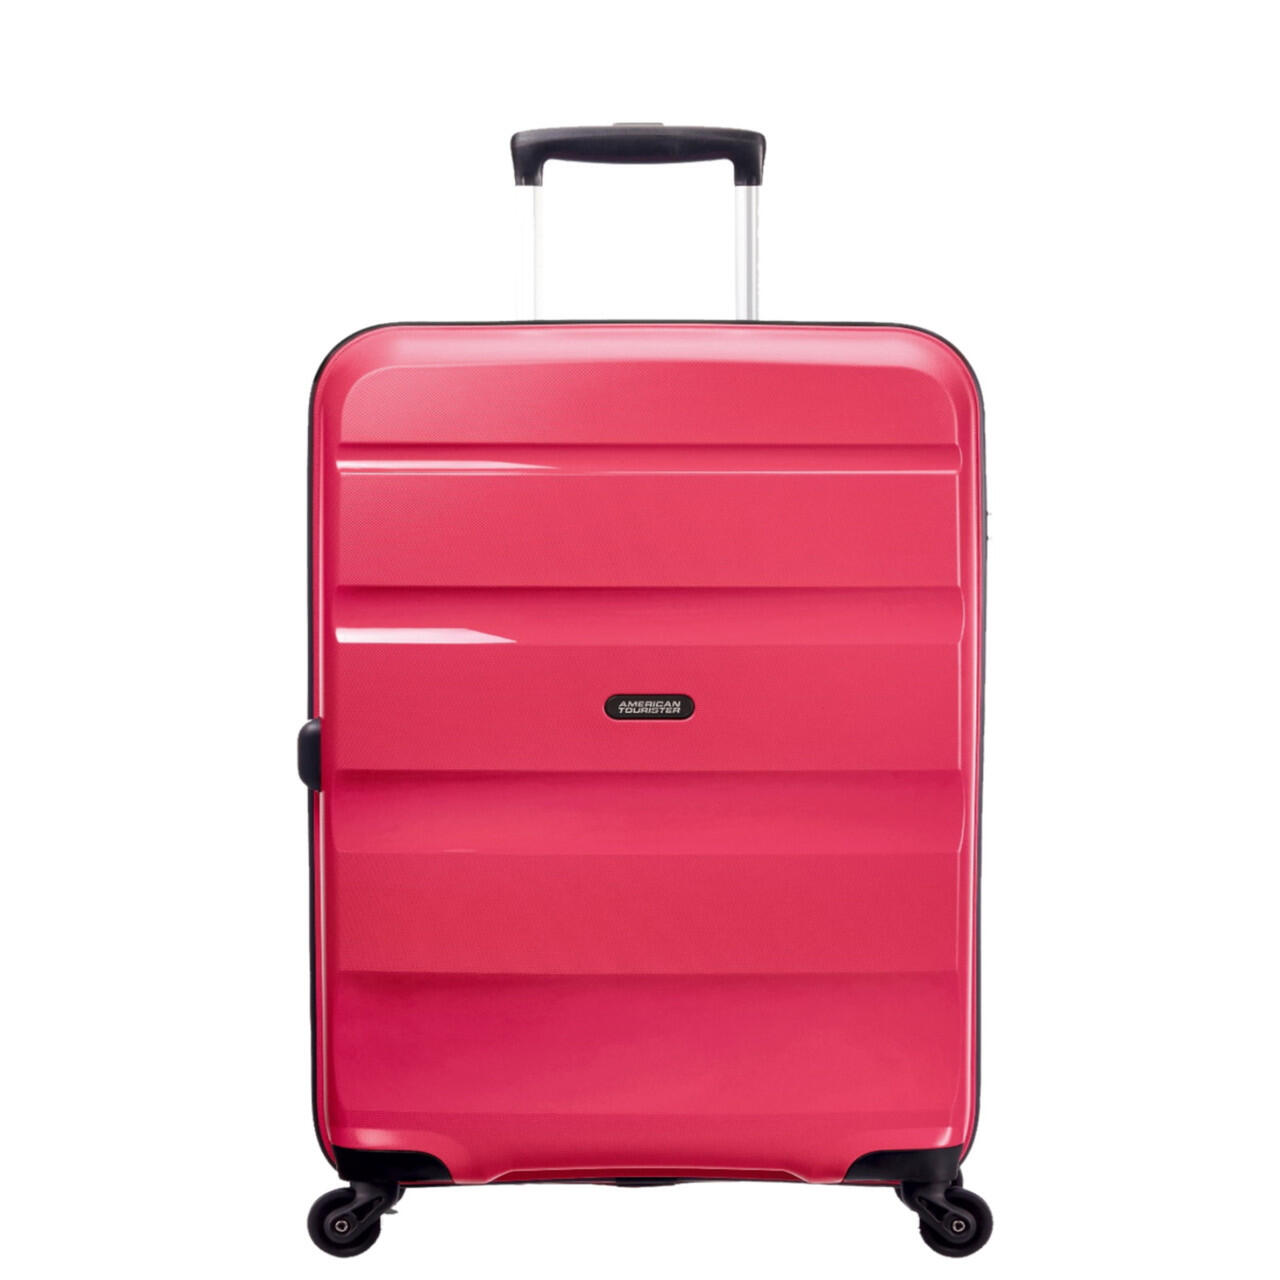 Bon Air 4 Wheel Cabin Suitcase - Pink 1/7